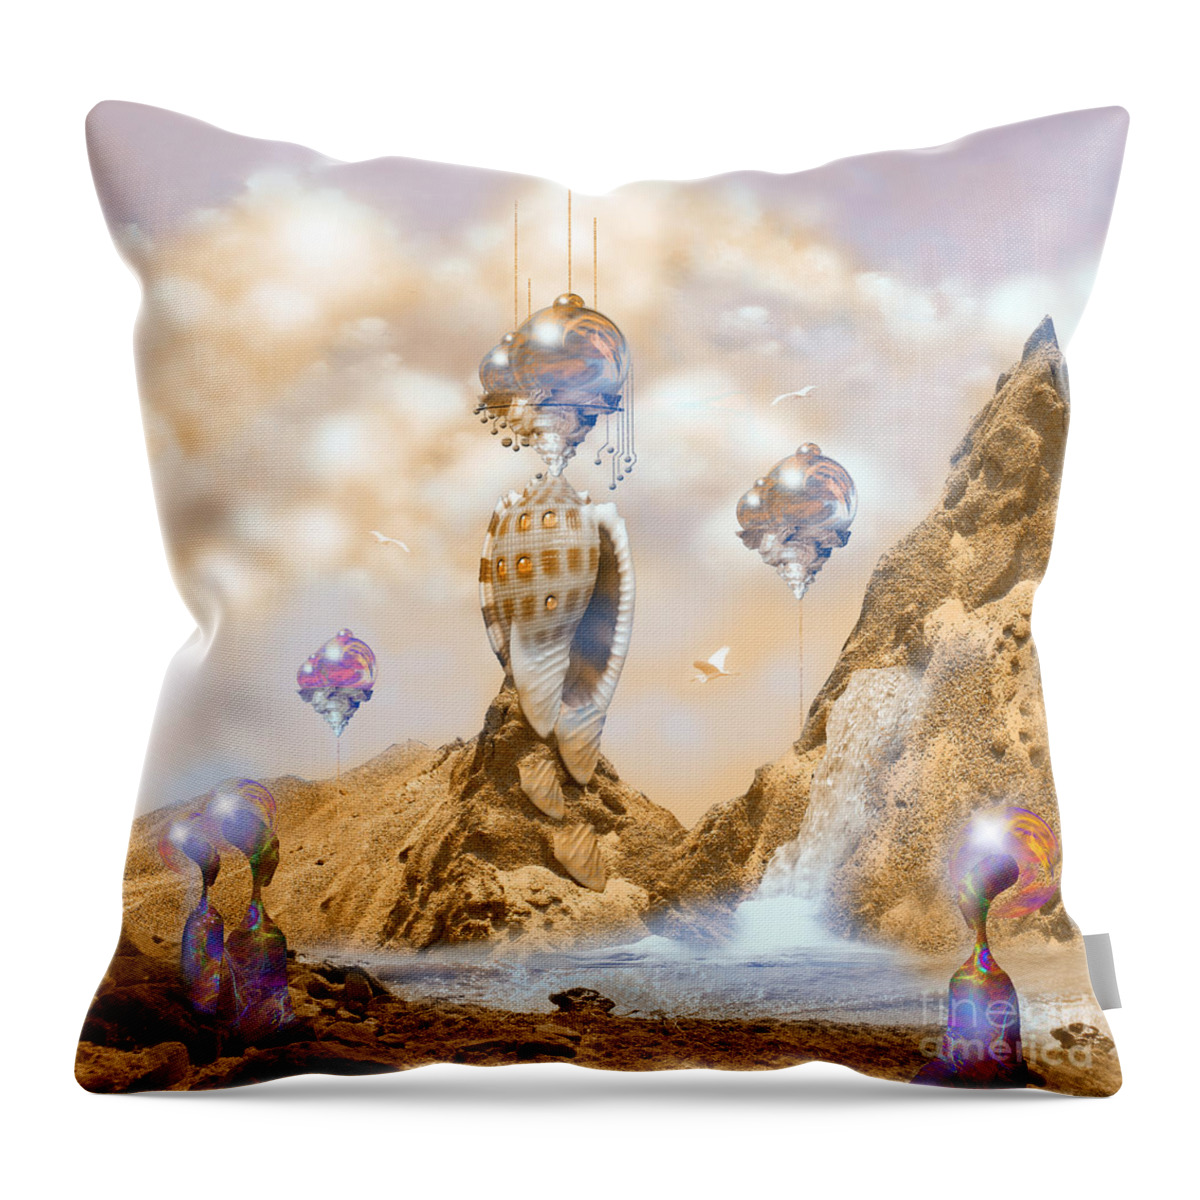 Digital Throw Pillow featuring the digital art Snail Shell city by Alexa Szlavics